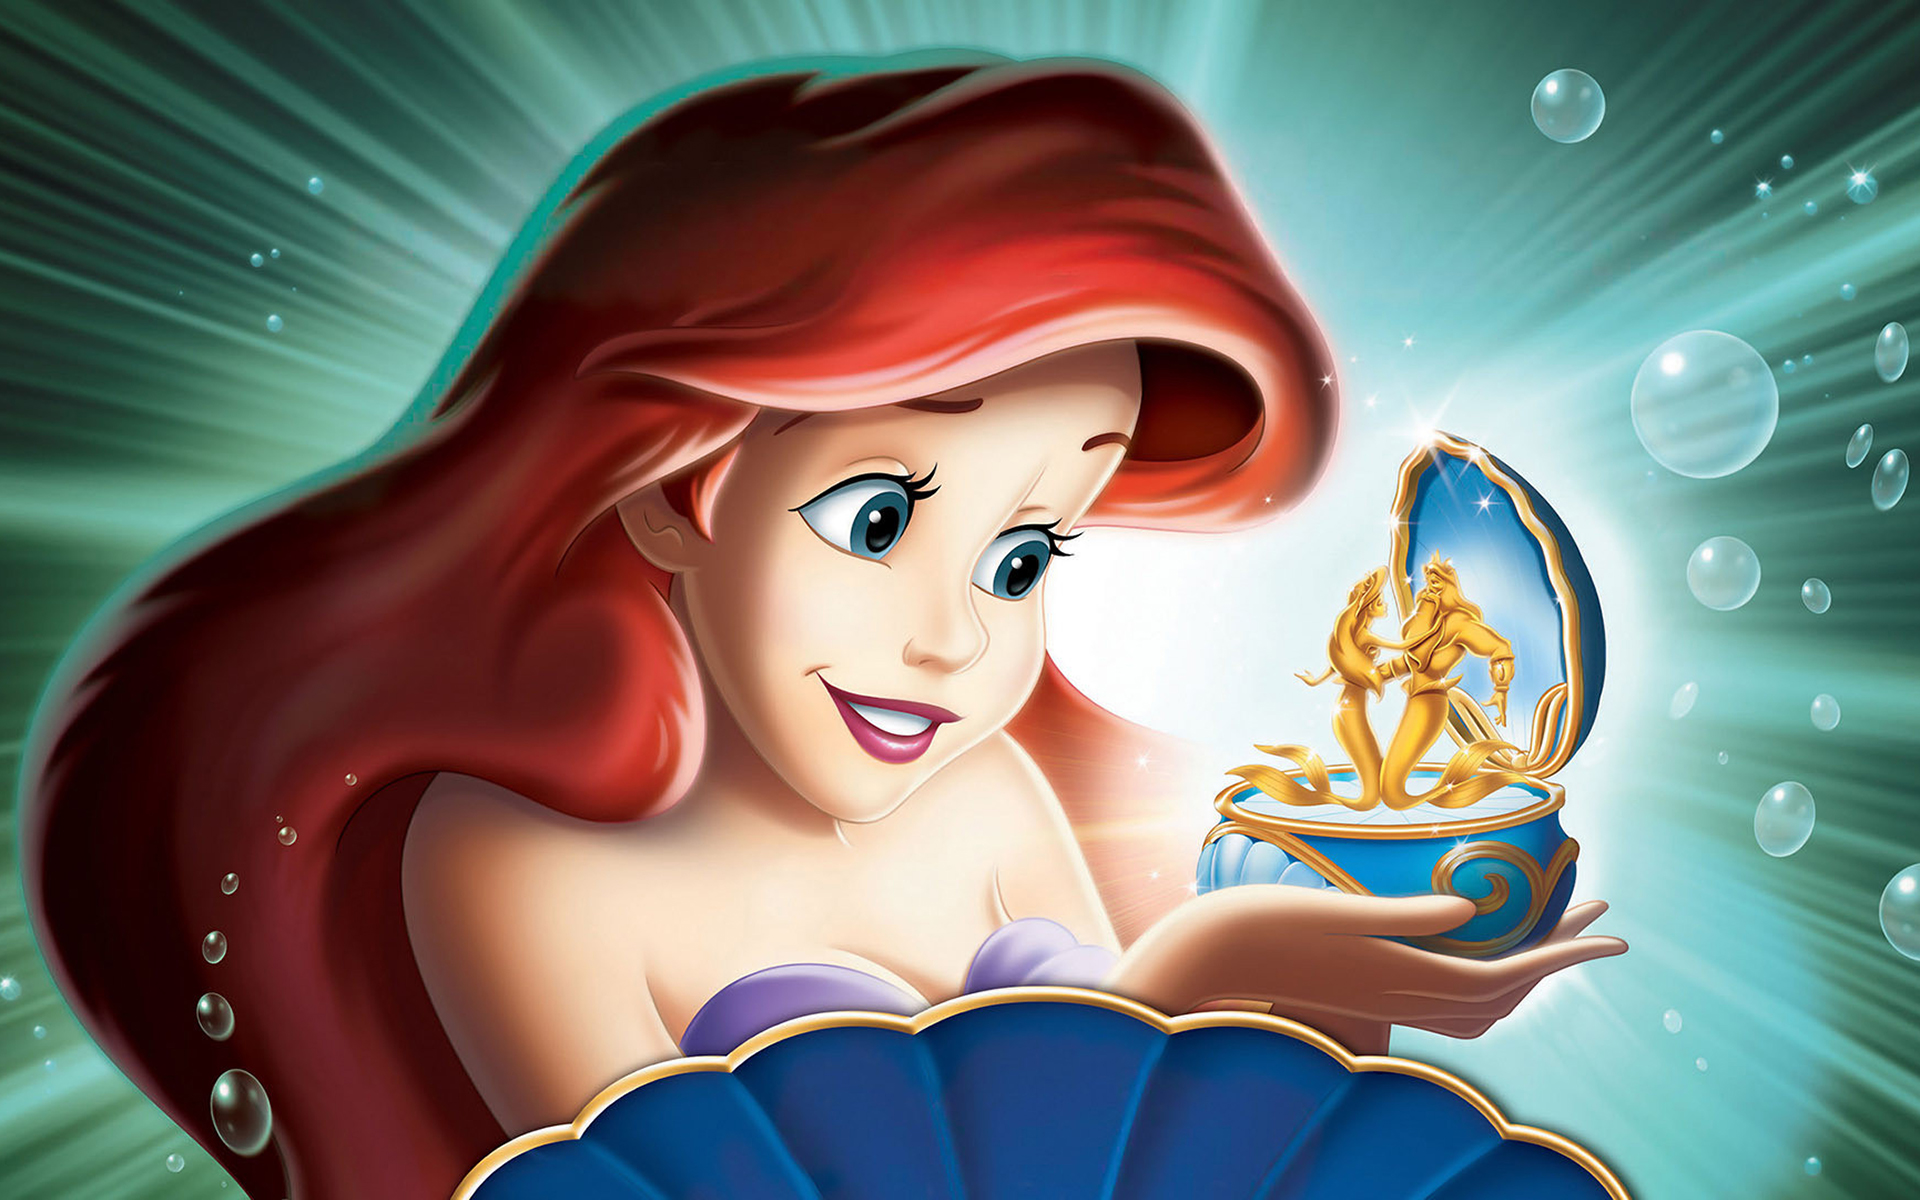 The Little Mermaid: Ariel's Beginning Wallpaper